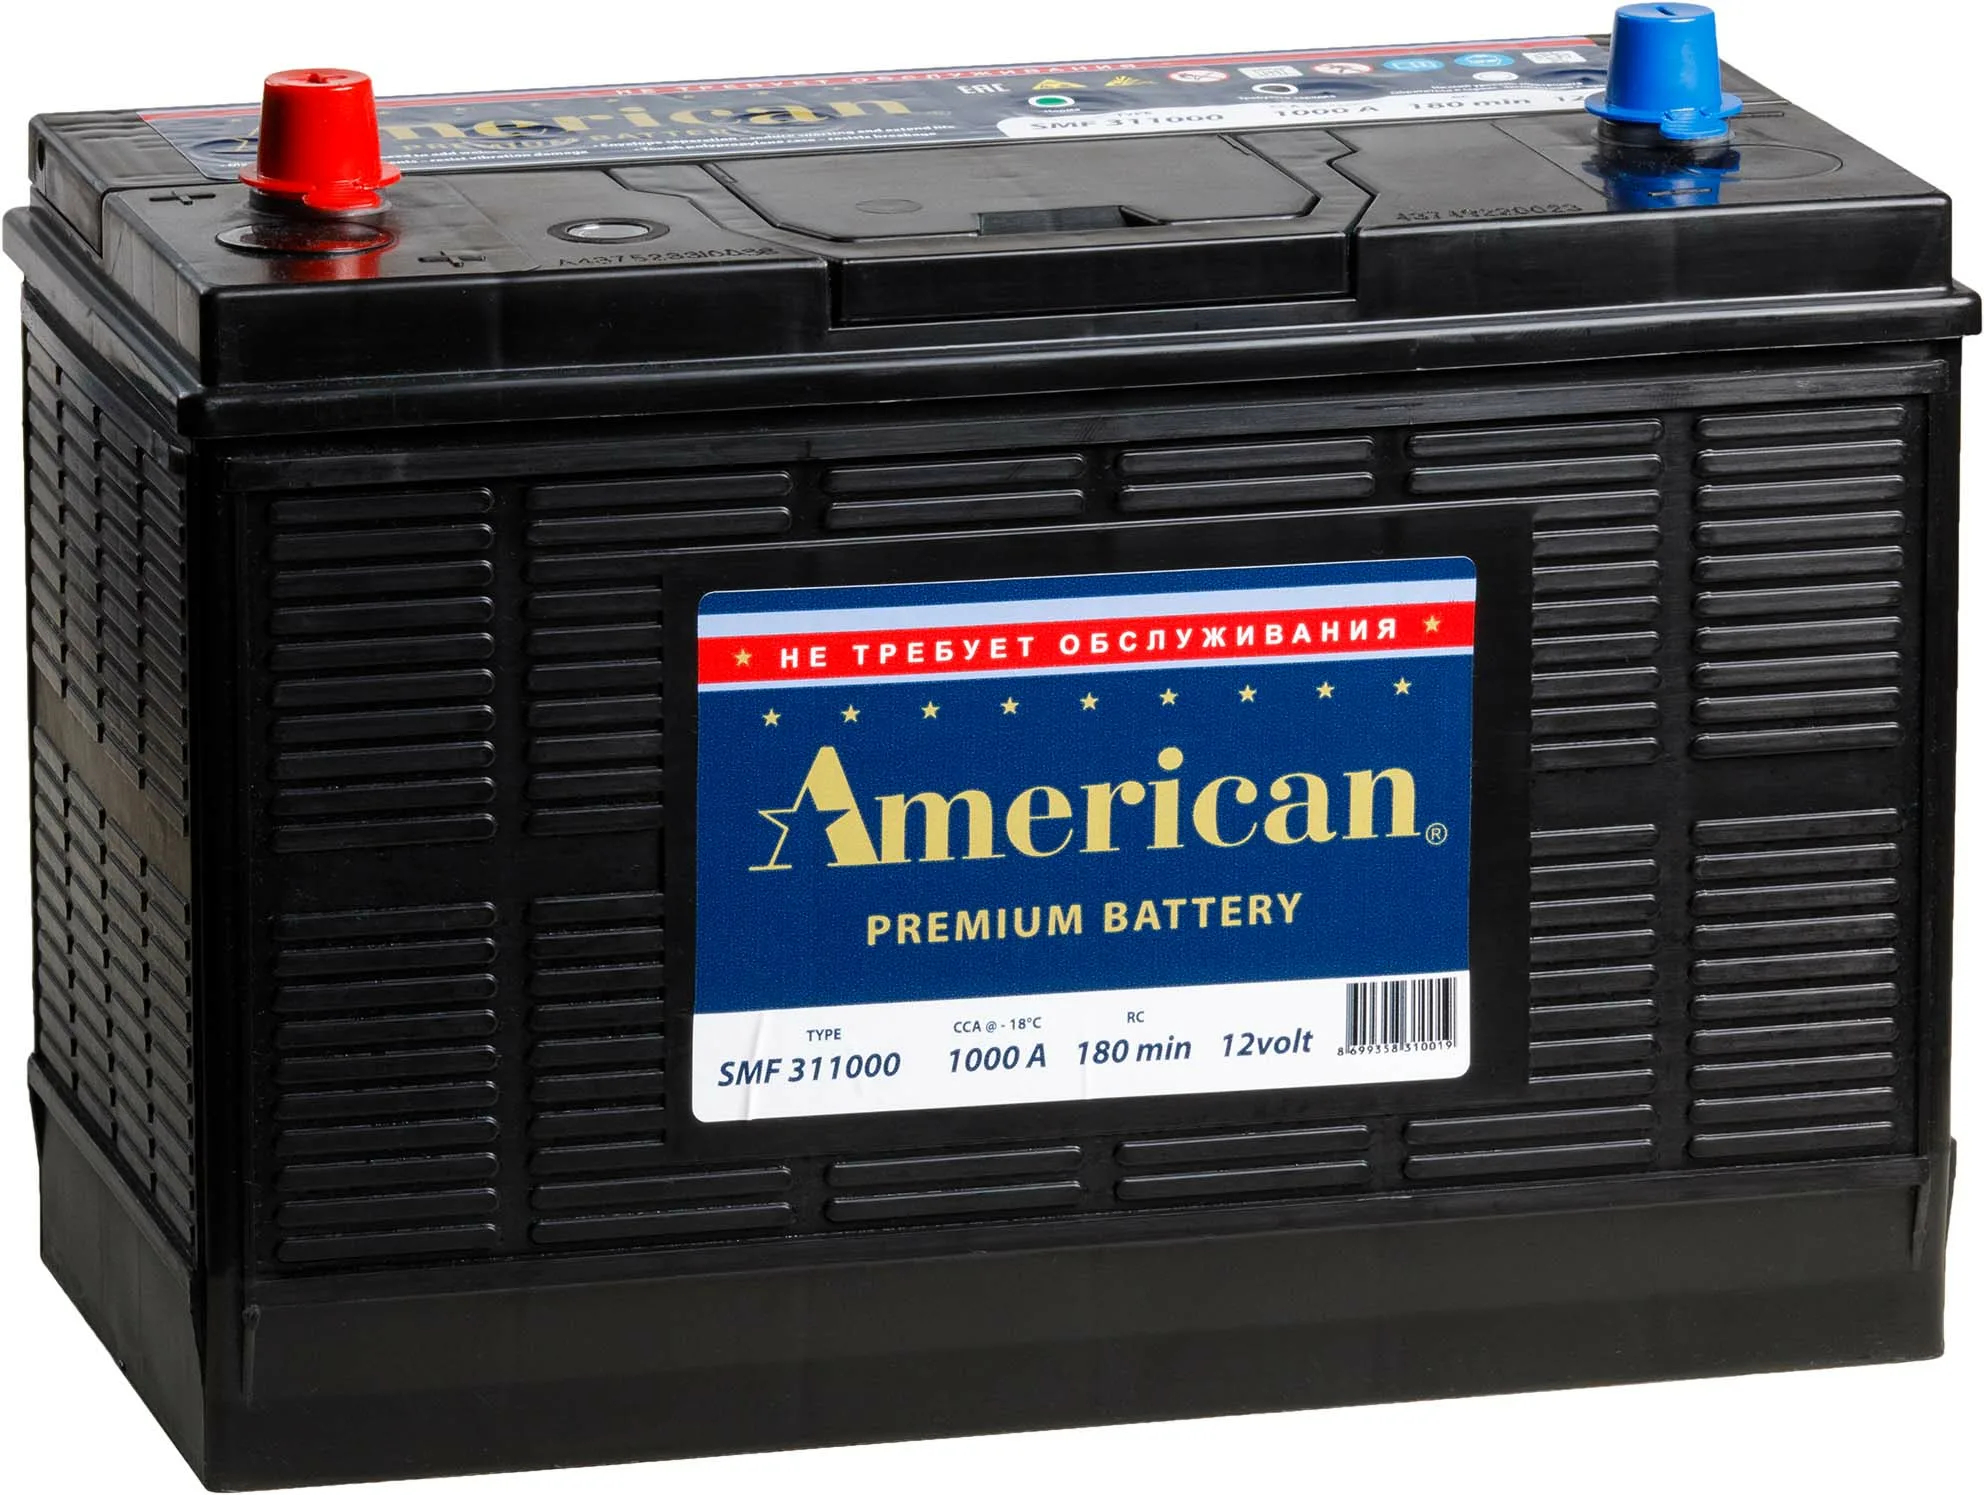 Smf аккумуляторы автомобильные. АКБ SMF 311000 American. Аккумулятор American 31-1000. АКБ American 311000t (1000a cca) 140а/ч. АКБ American Premium Battery 12v 31 1000т 1000а.